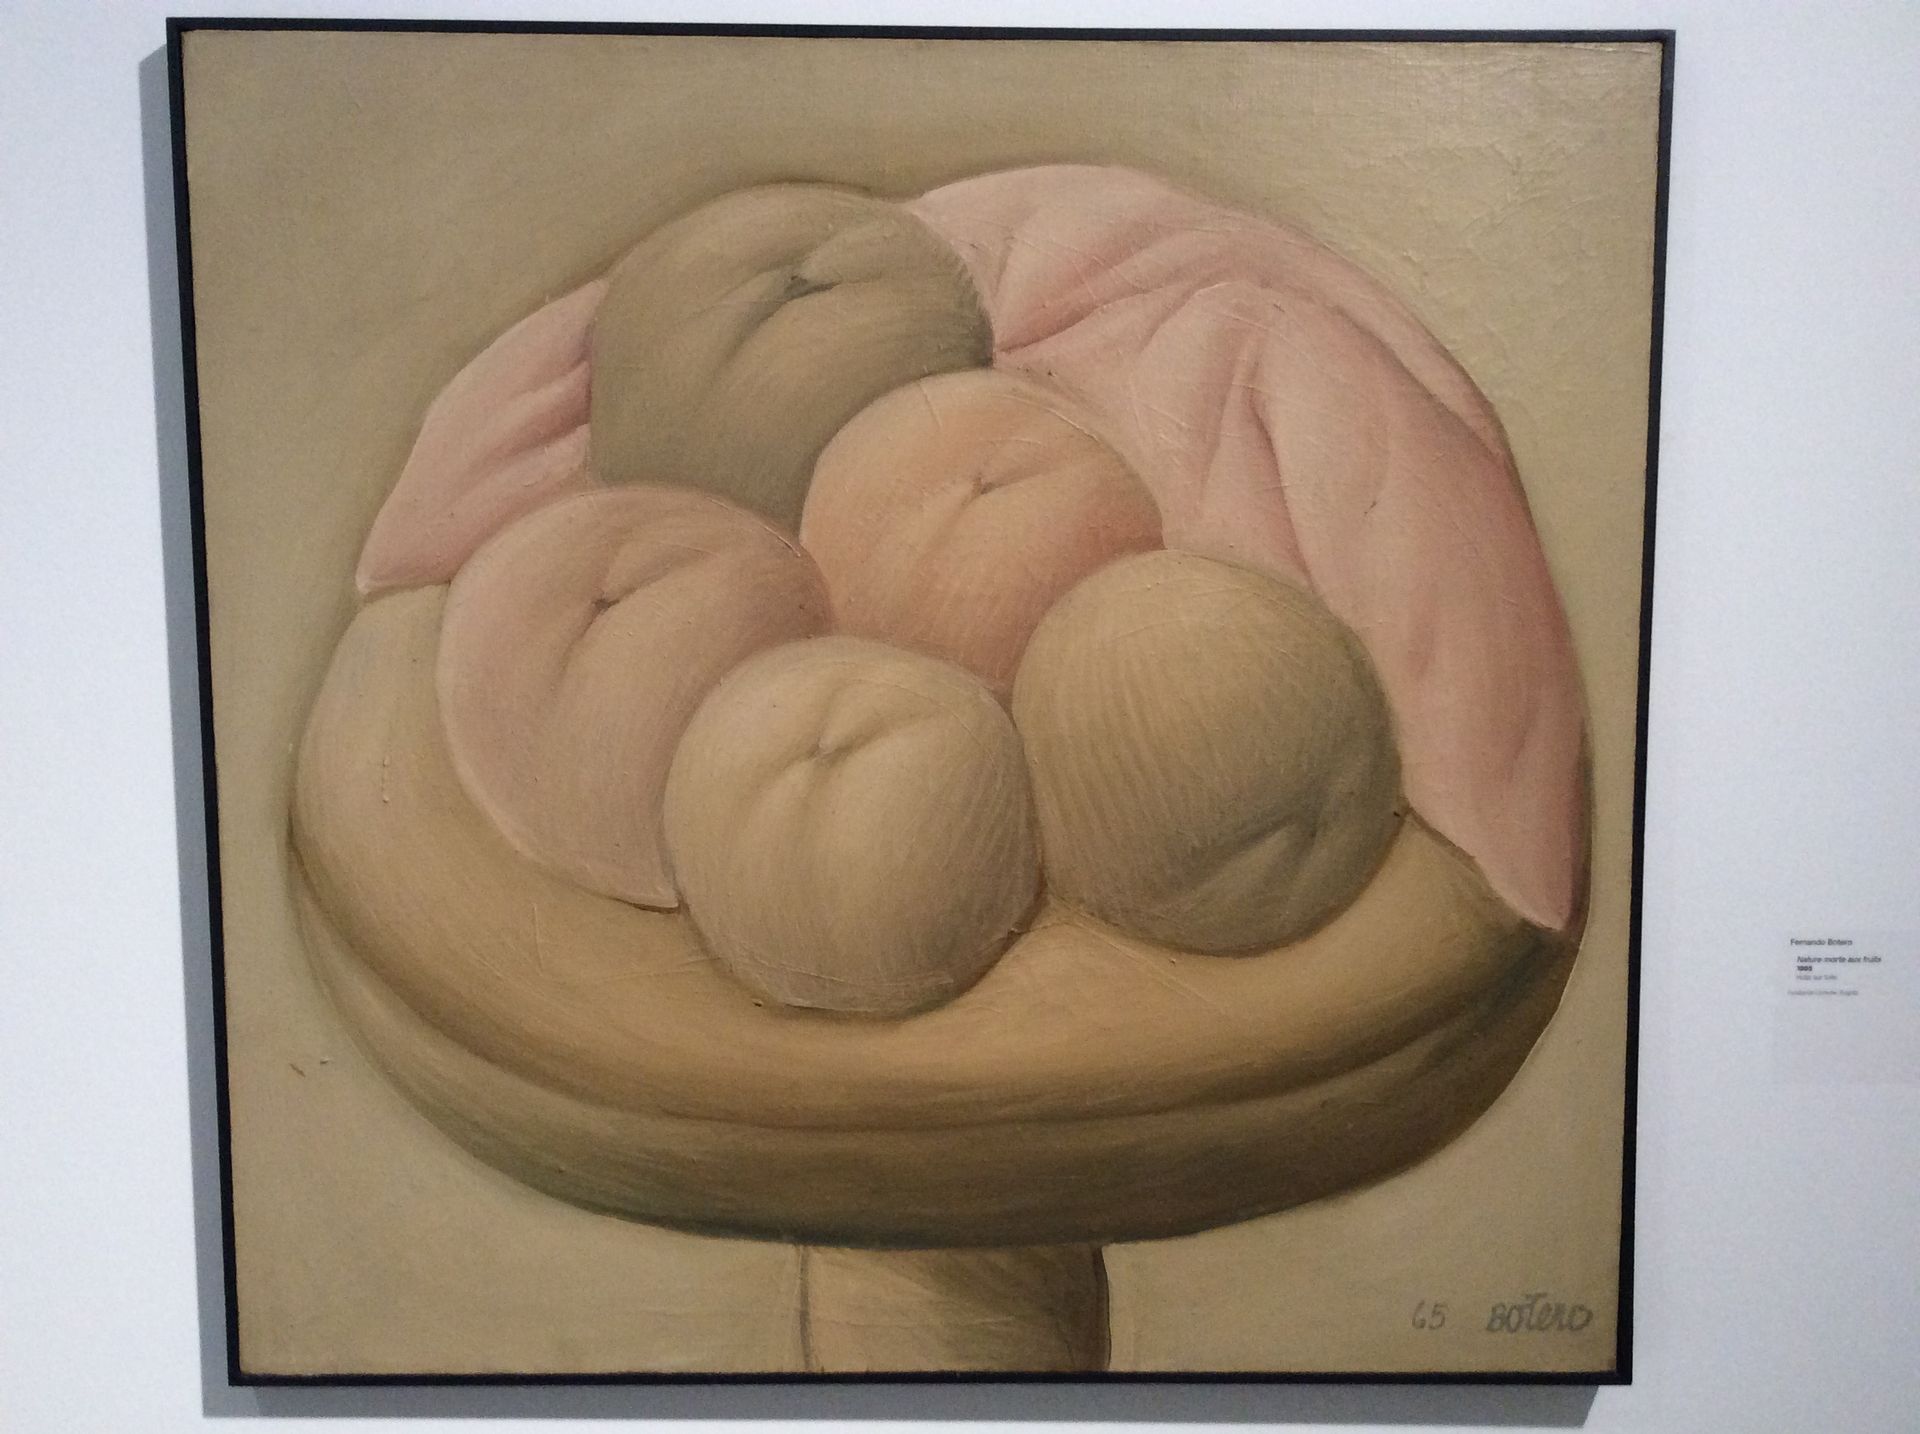 Fernando Botero, Nature morte aux fruits, 1965